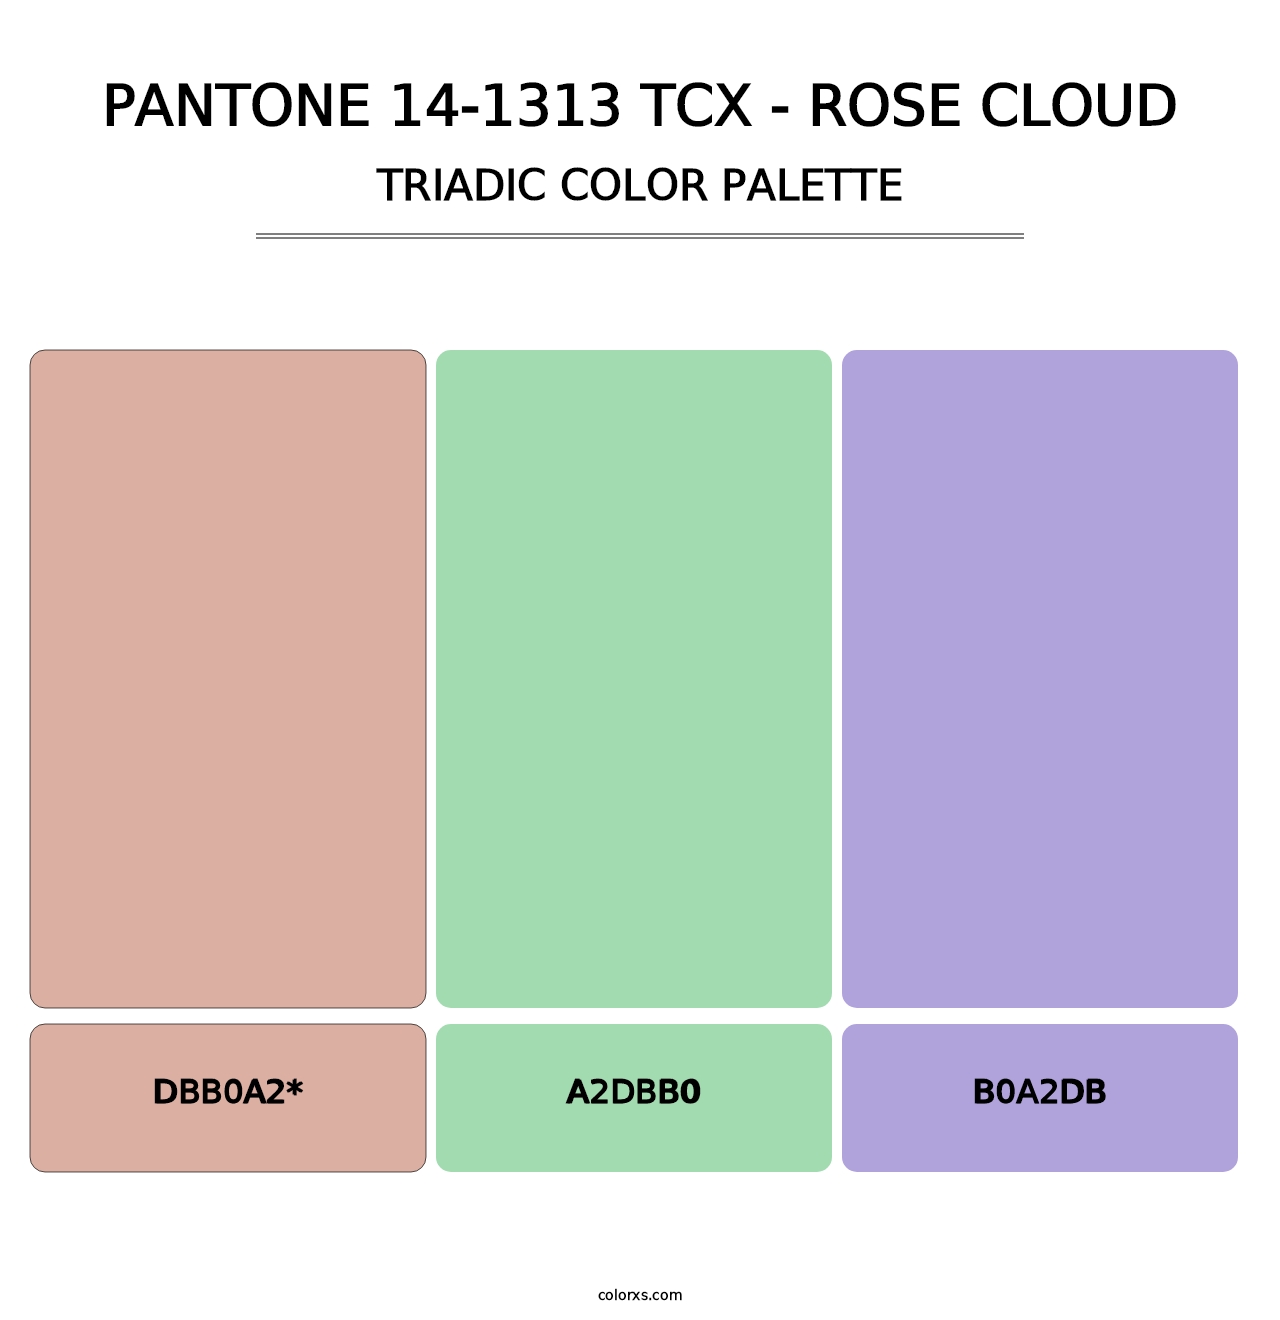 PANTONE 14-1313 TCX - Rose Cloud - Triadic Color Palette